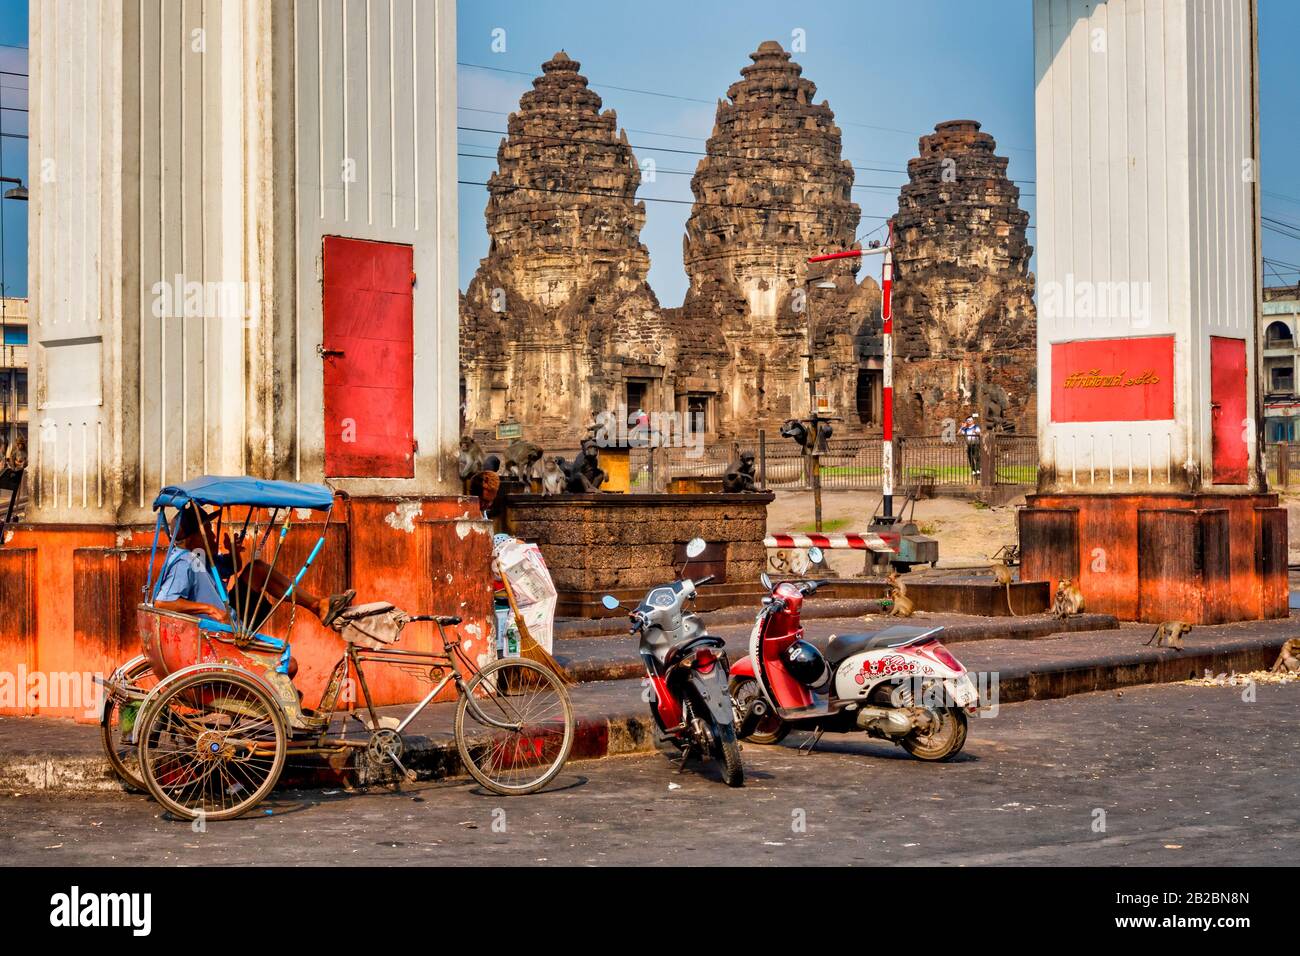 Rickshaw in front of Prang Sam Yod temple in Lopburi, Thailand Stock Photo